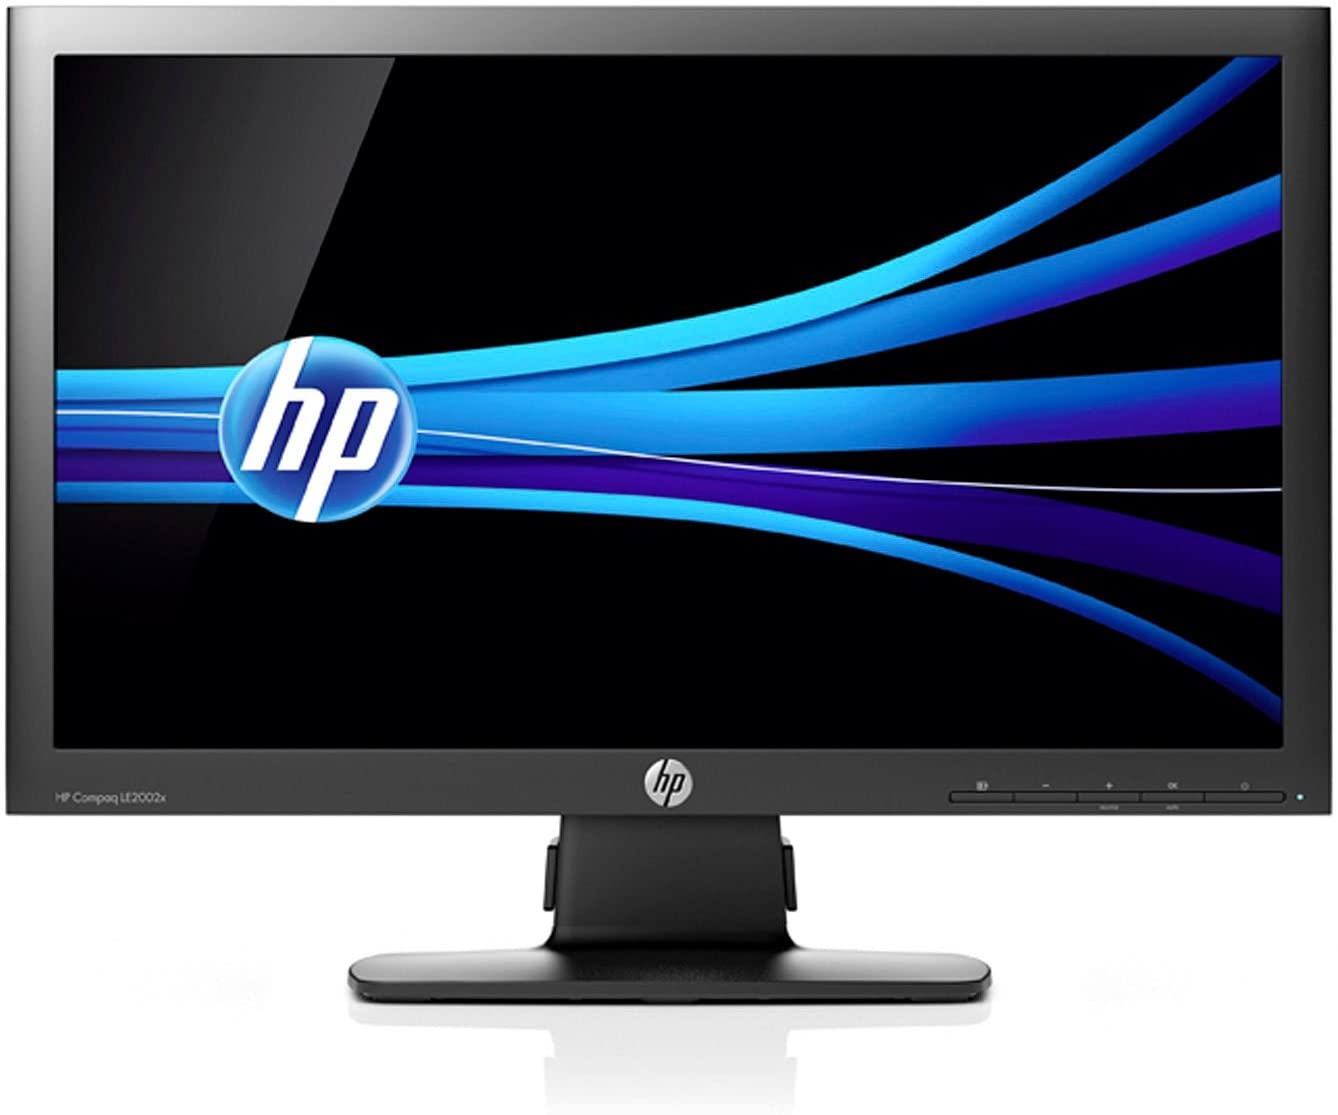 Bundle HP Prodesk 600 g1 DM + HP Compaq LE2002x LCD 20″ Monitor | Intel Core i5-4570T | 8 GB RAM | SSD 256 GB | Windows 10 Pro